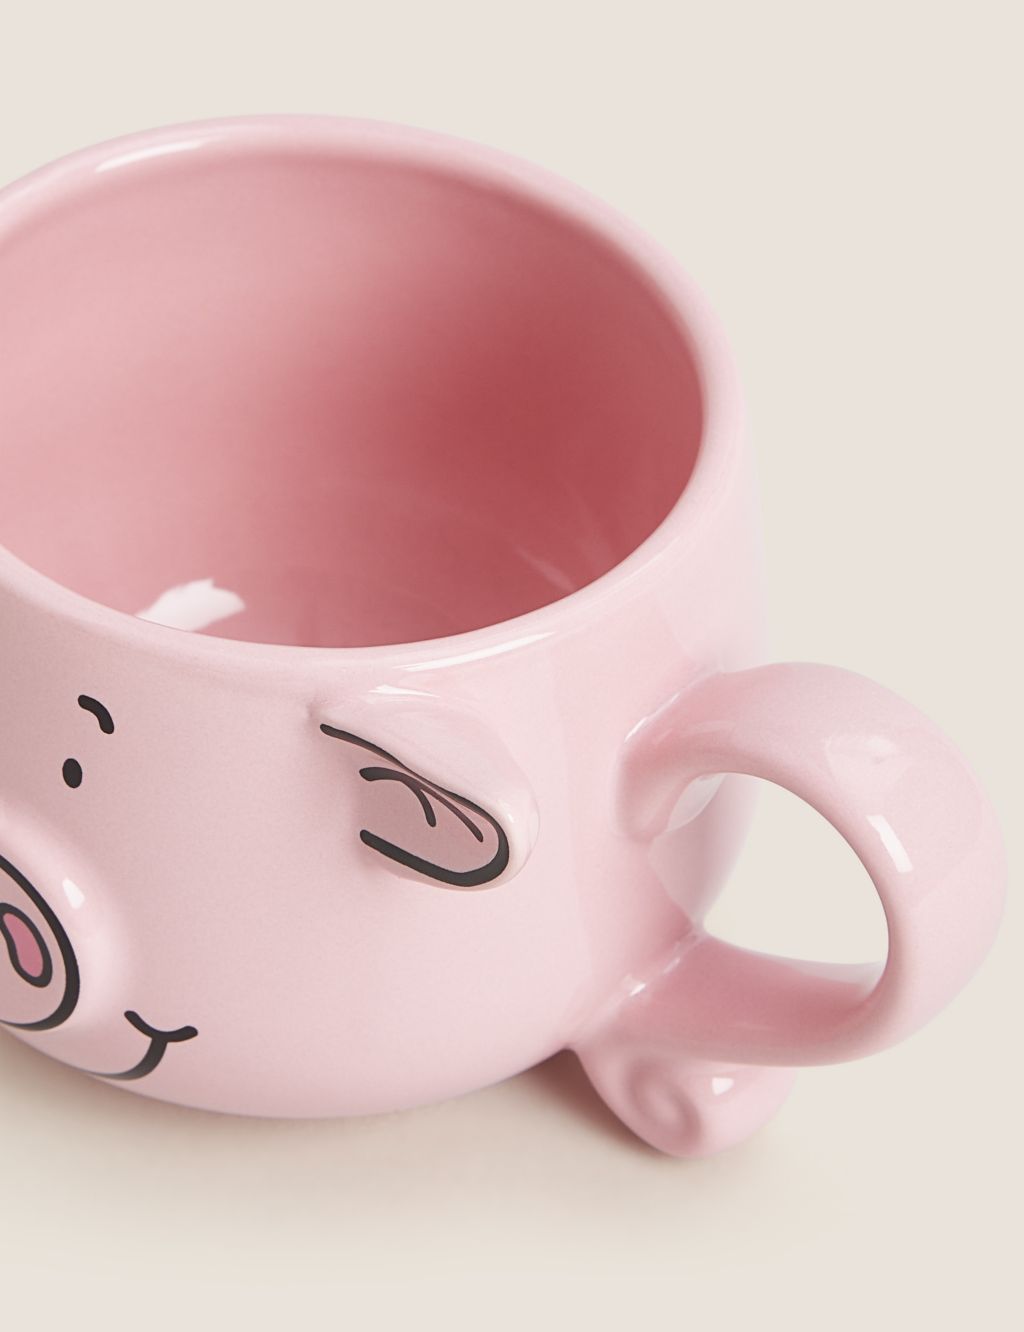 Percy Pig™ Mug image 3